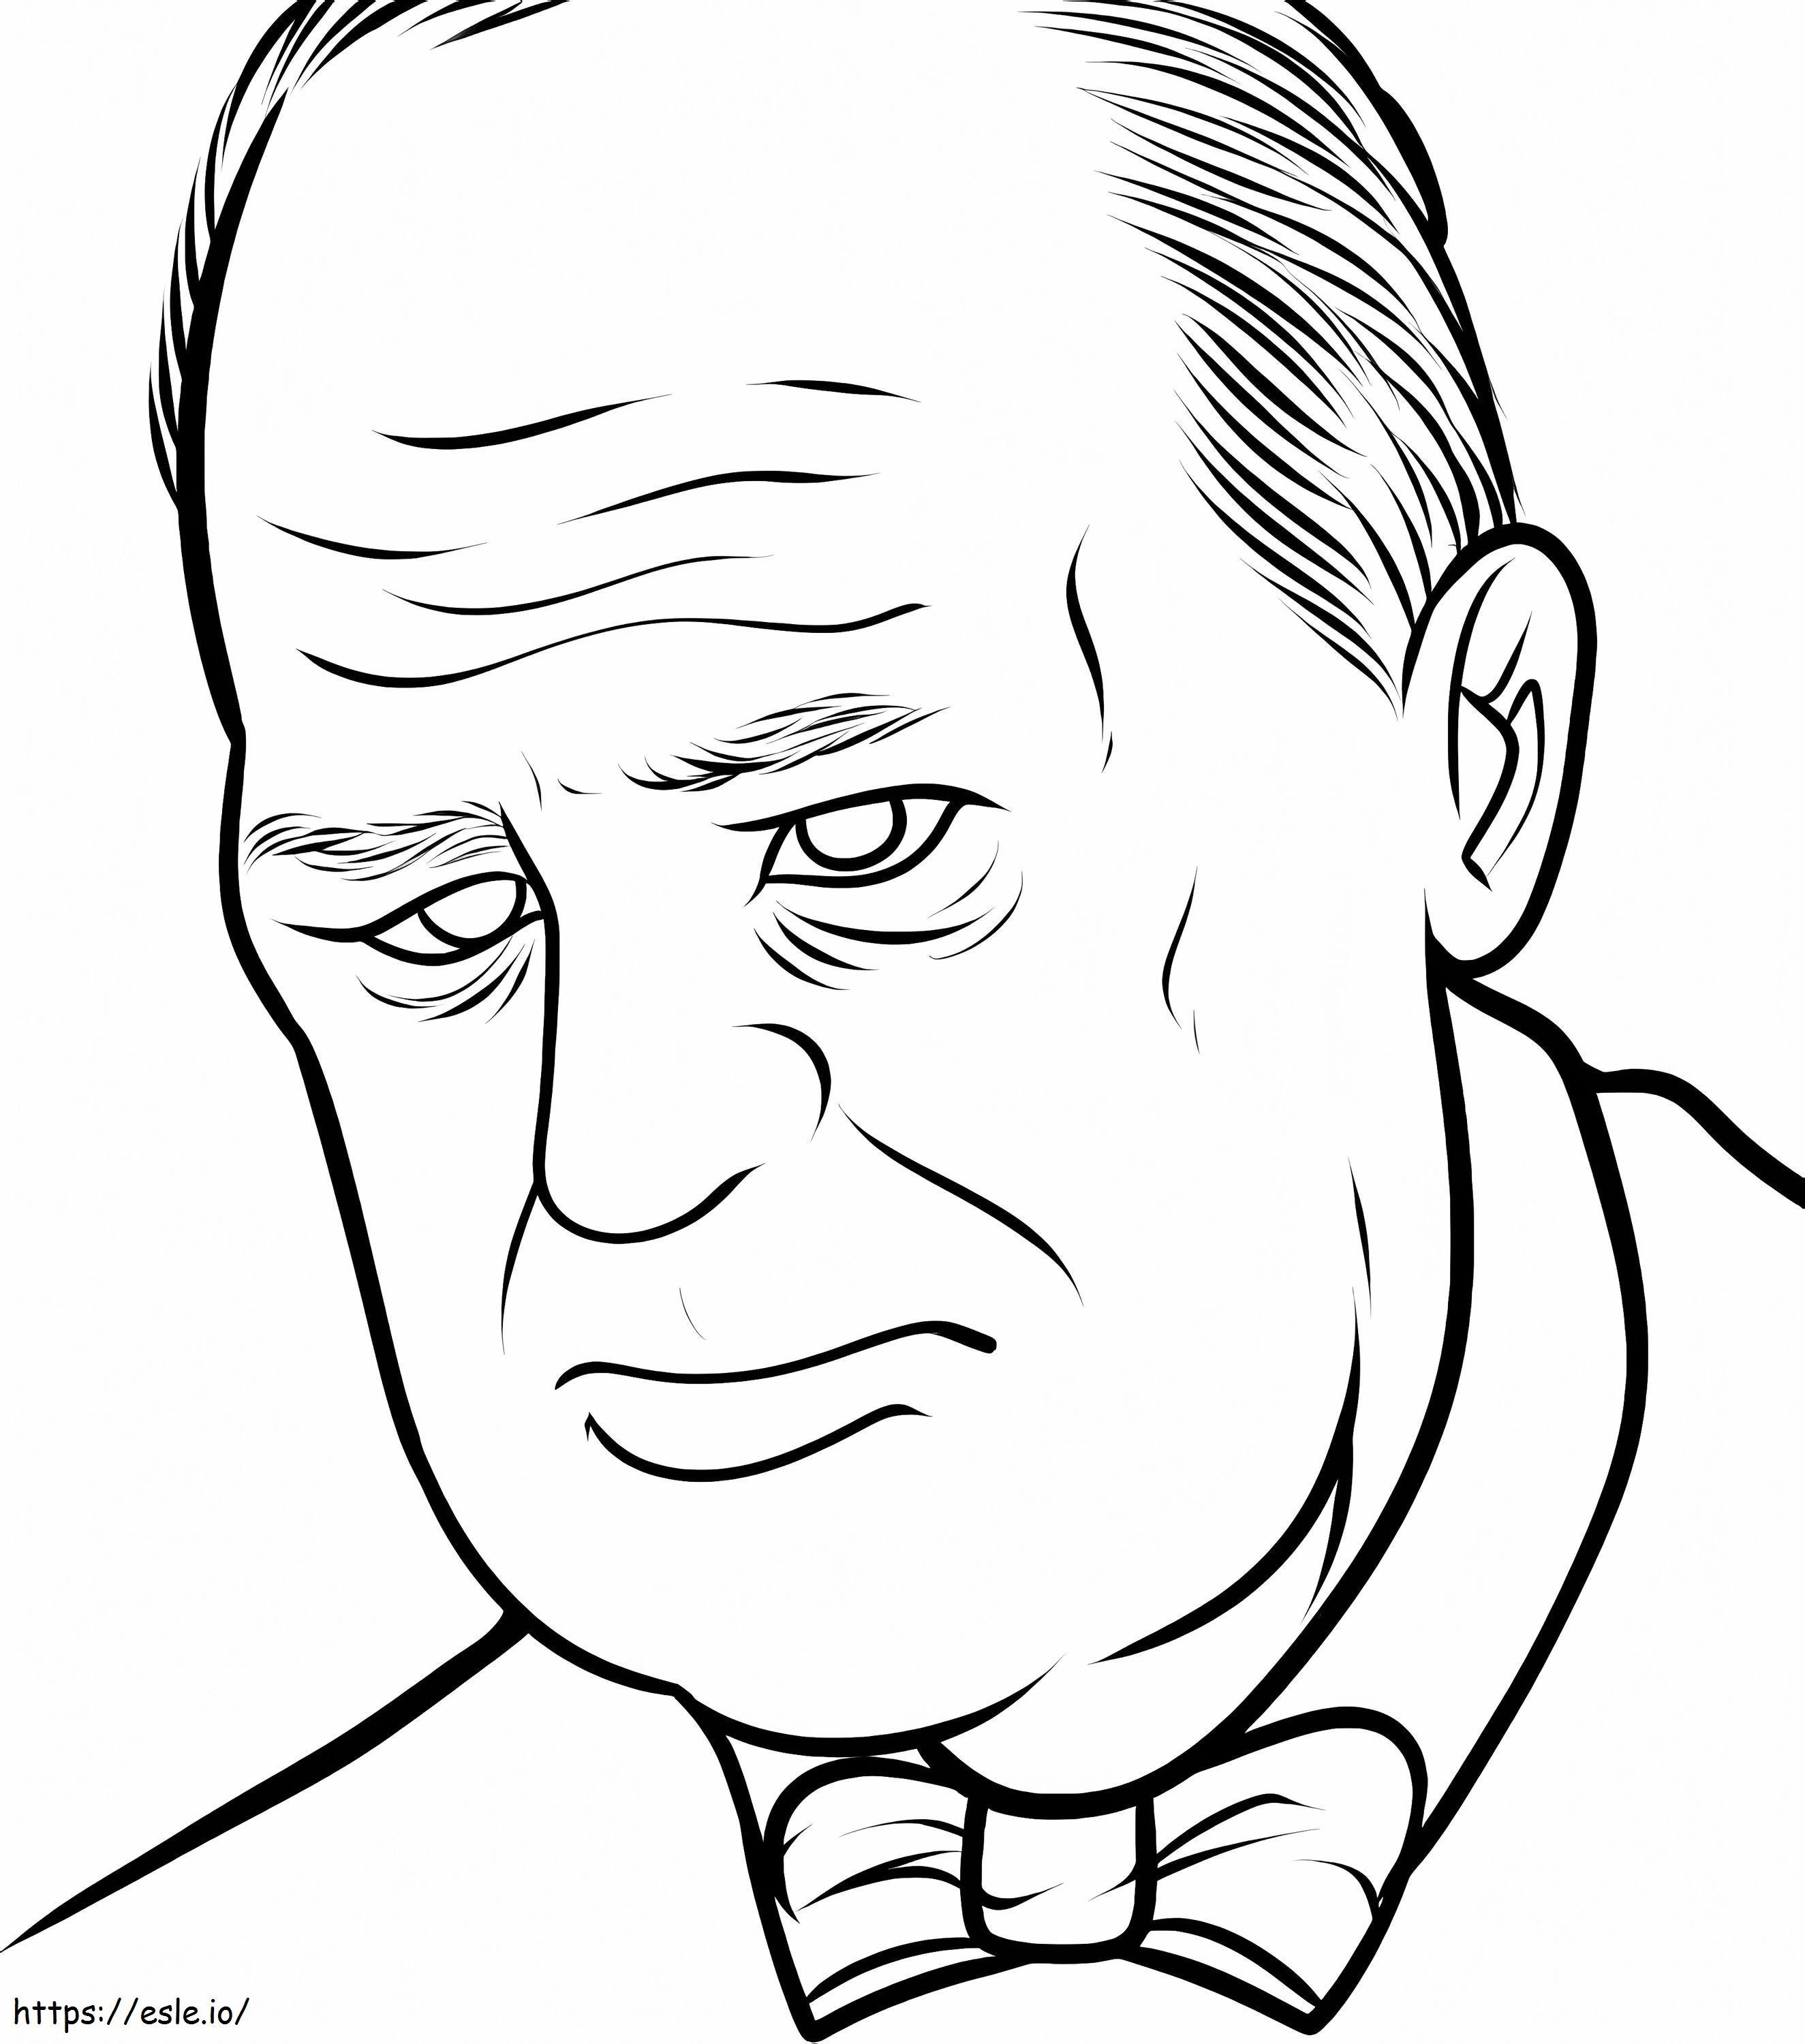 Winston Churchill 4 coloring page